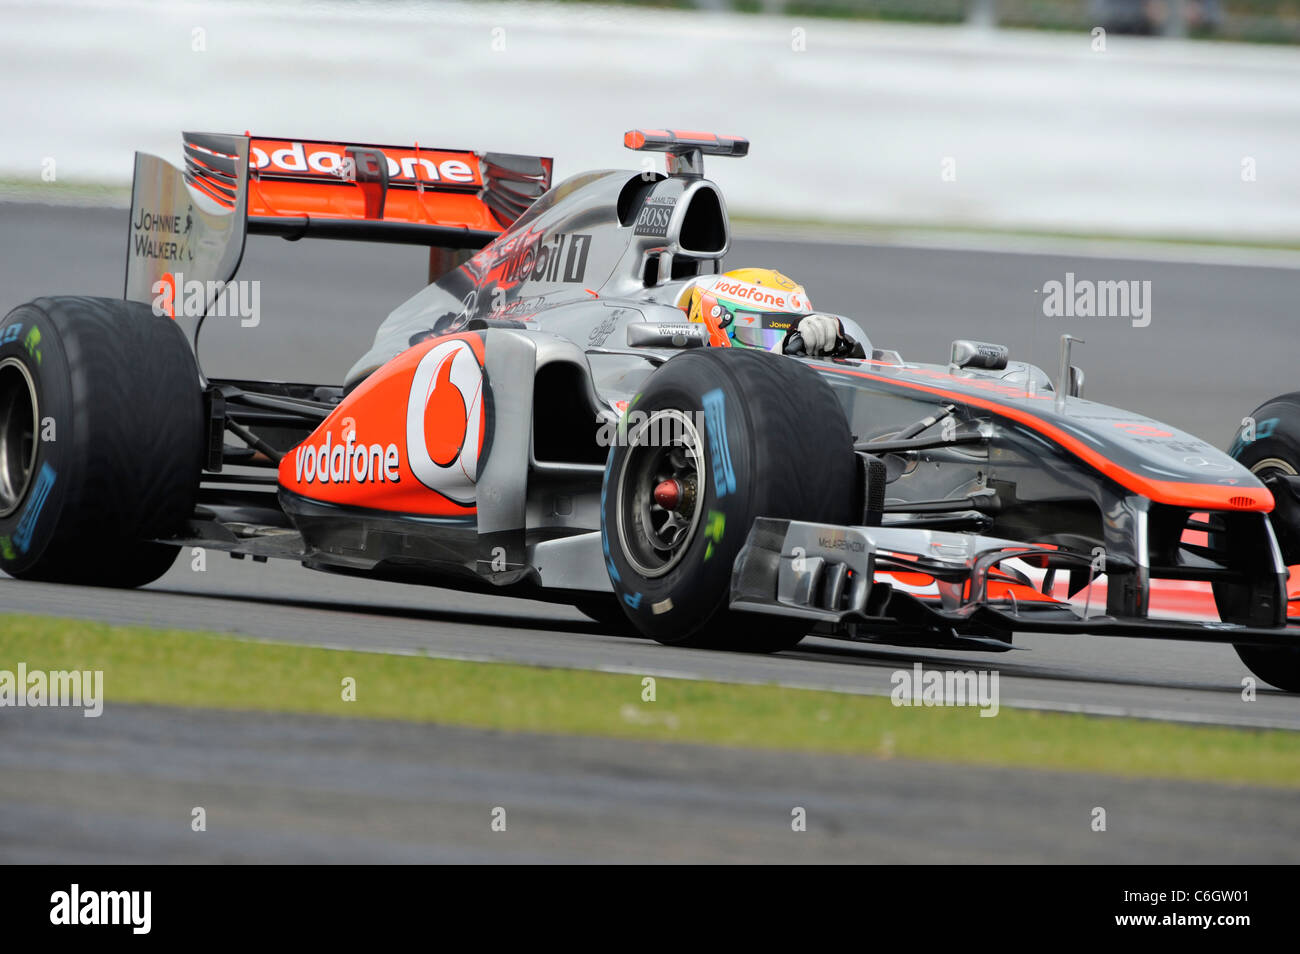 Lewis Hamilton in British Grand Prix Stock Photo